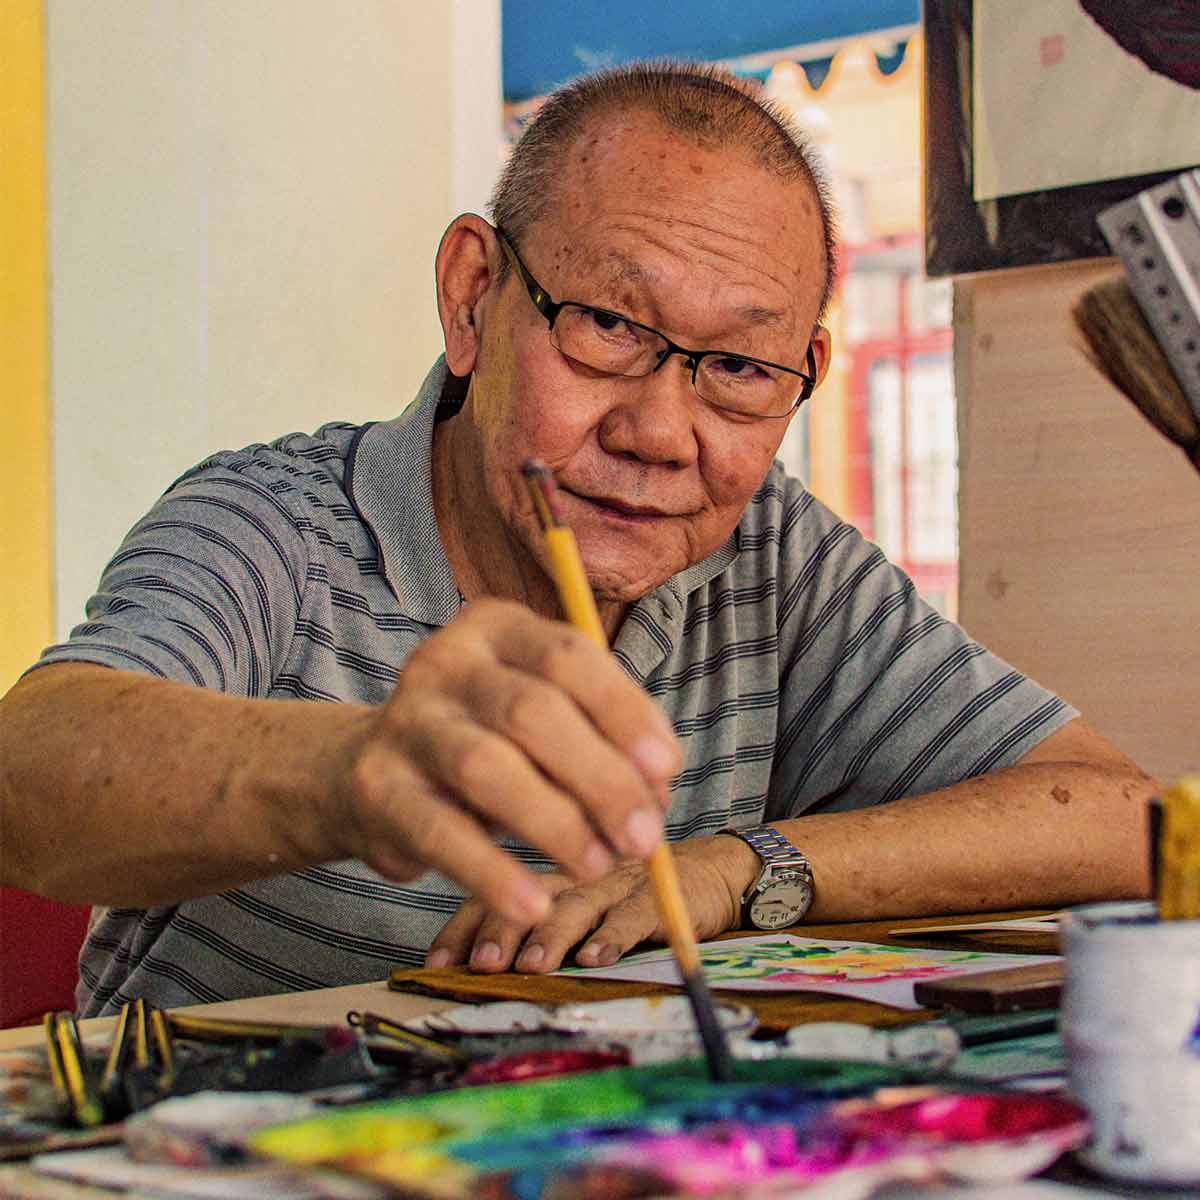 Older man painting